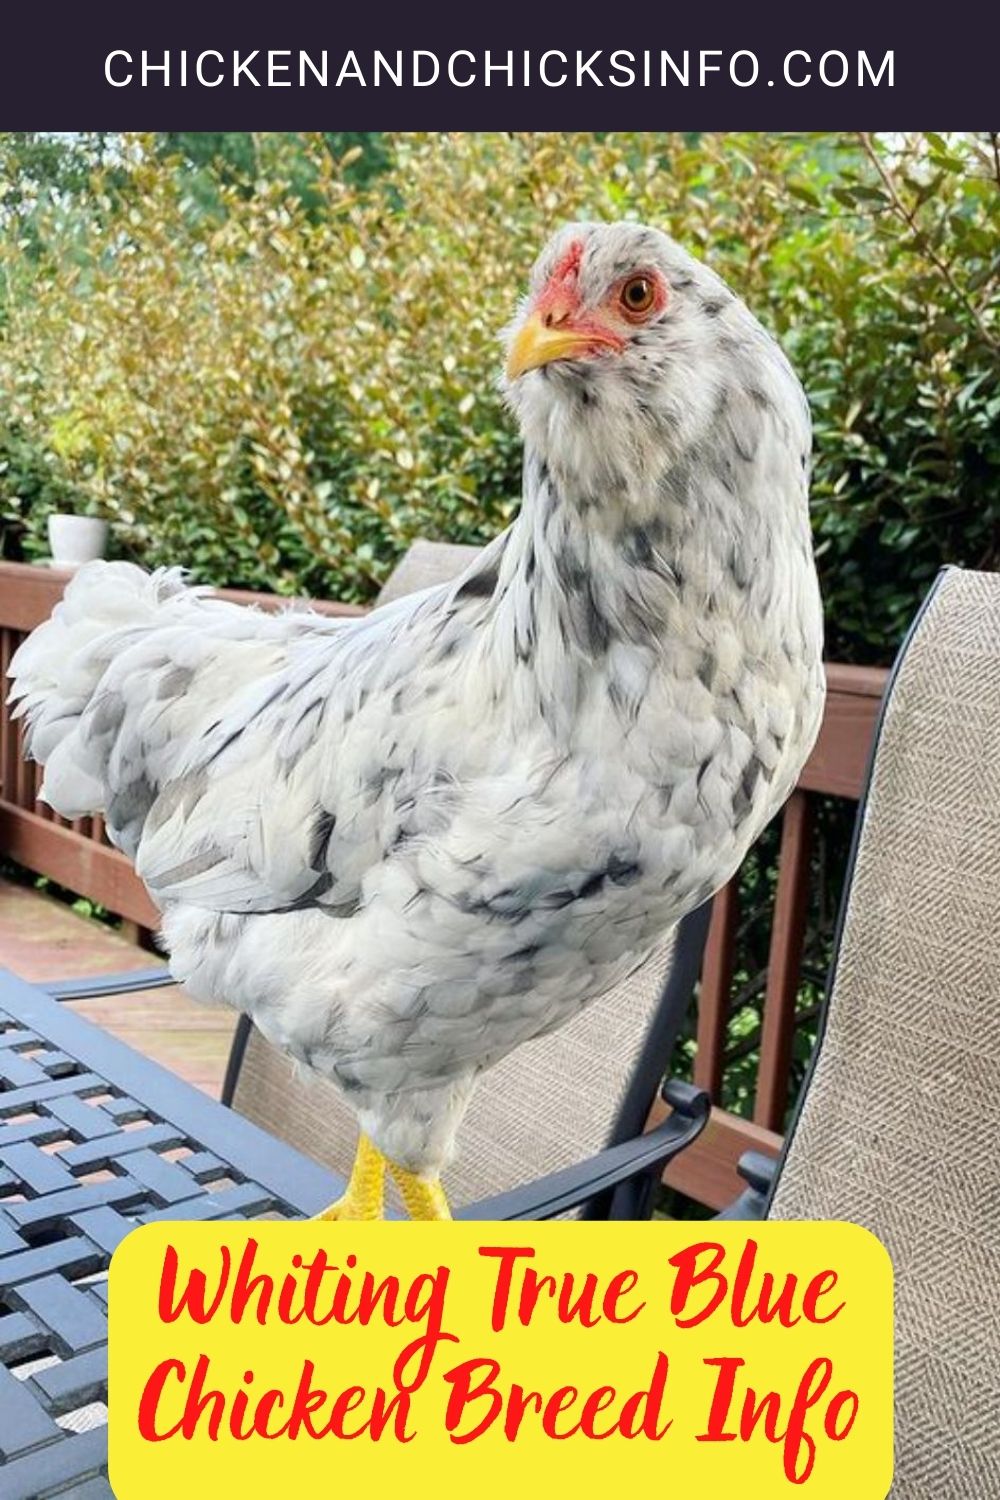 Whiting True Blue Chicken Breed Info pinterest image.